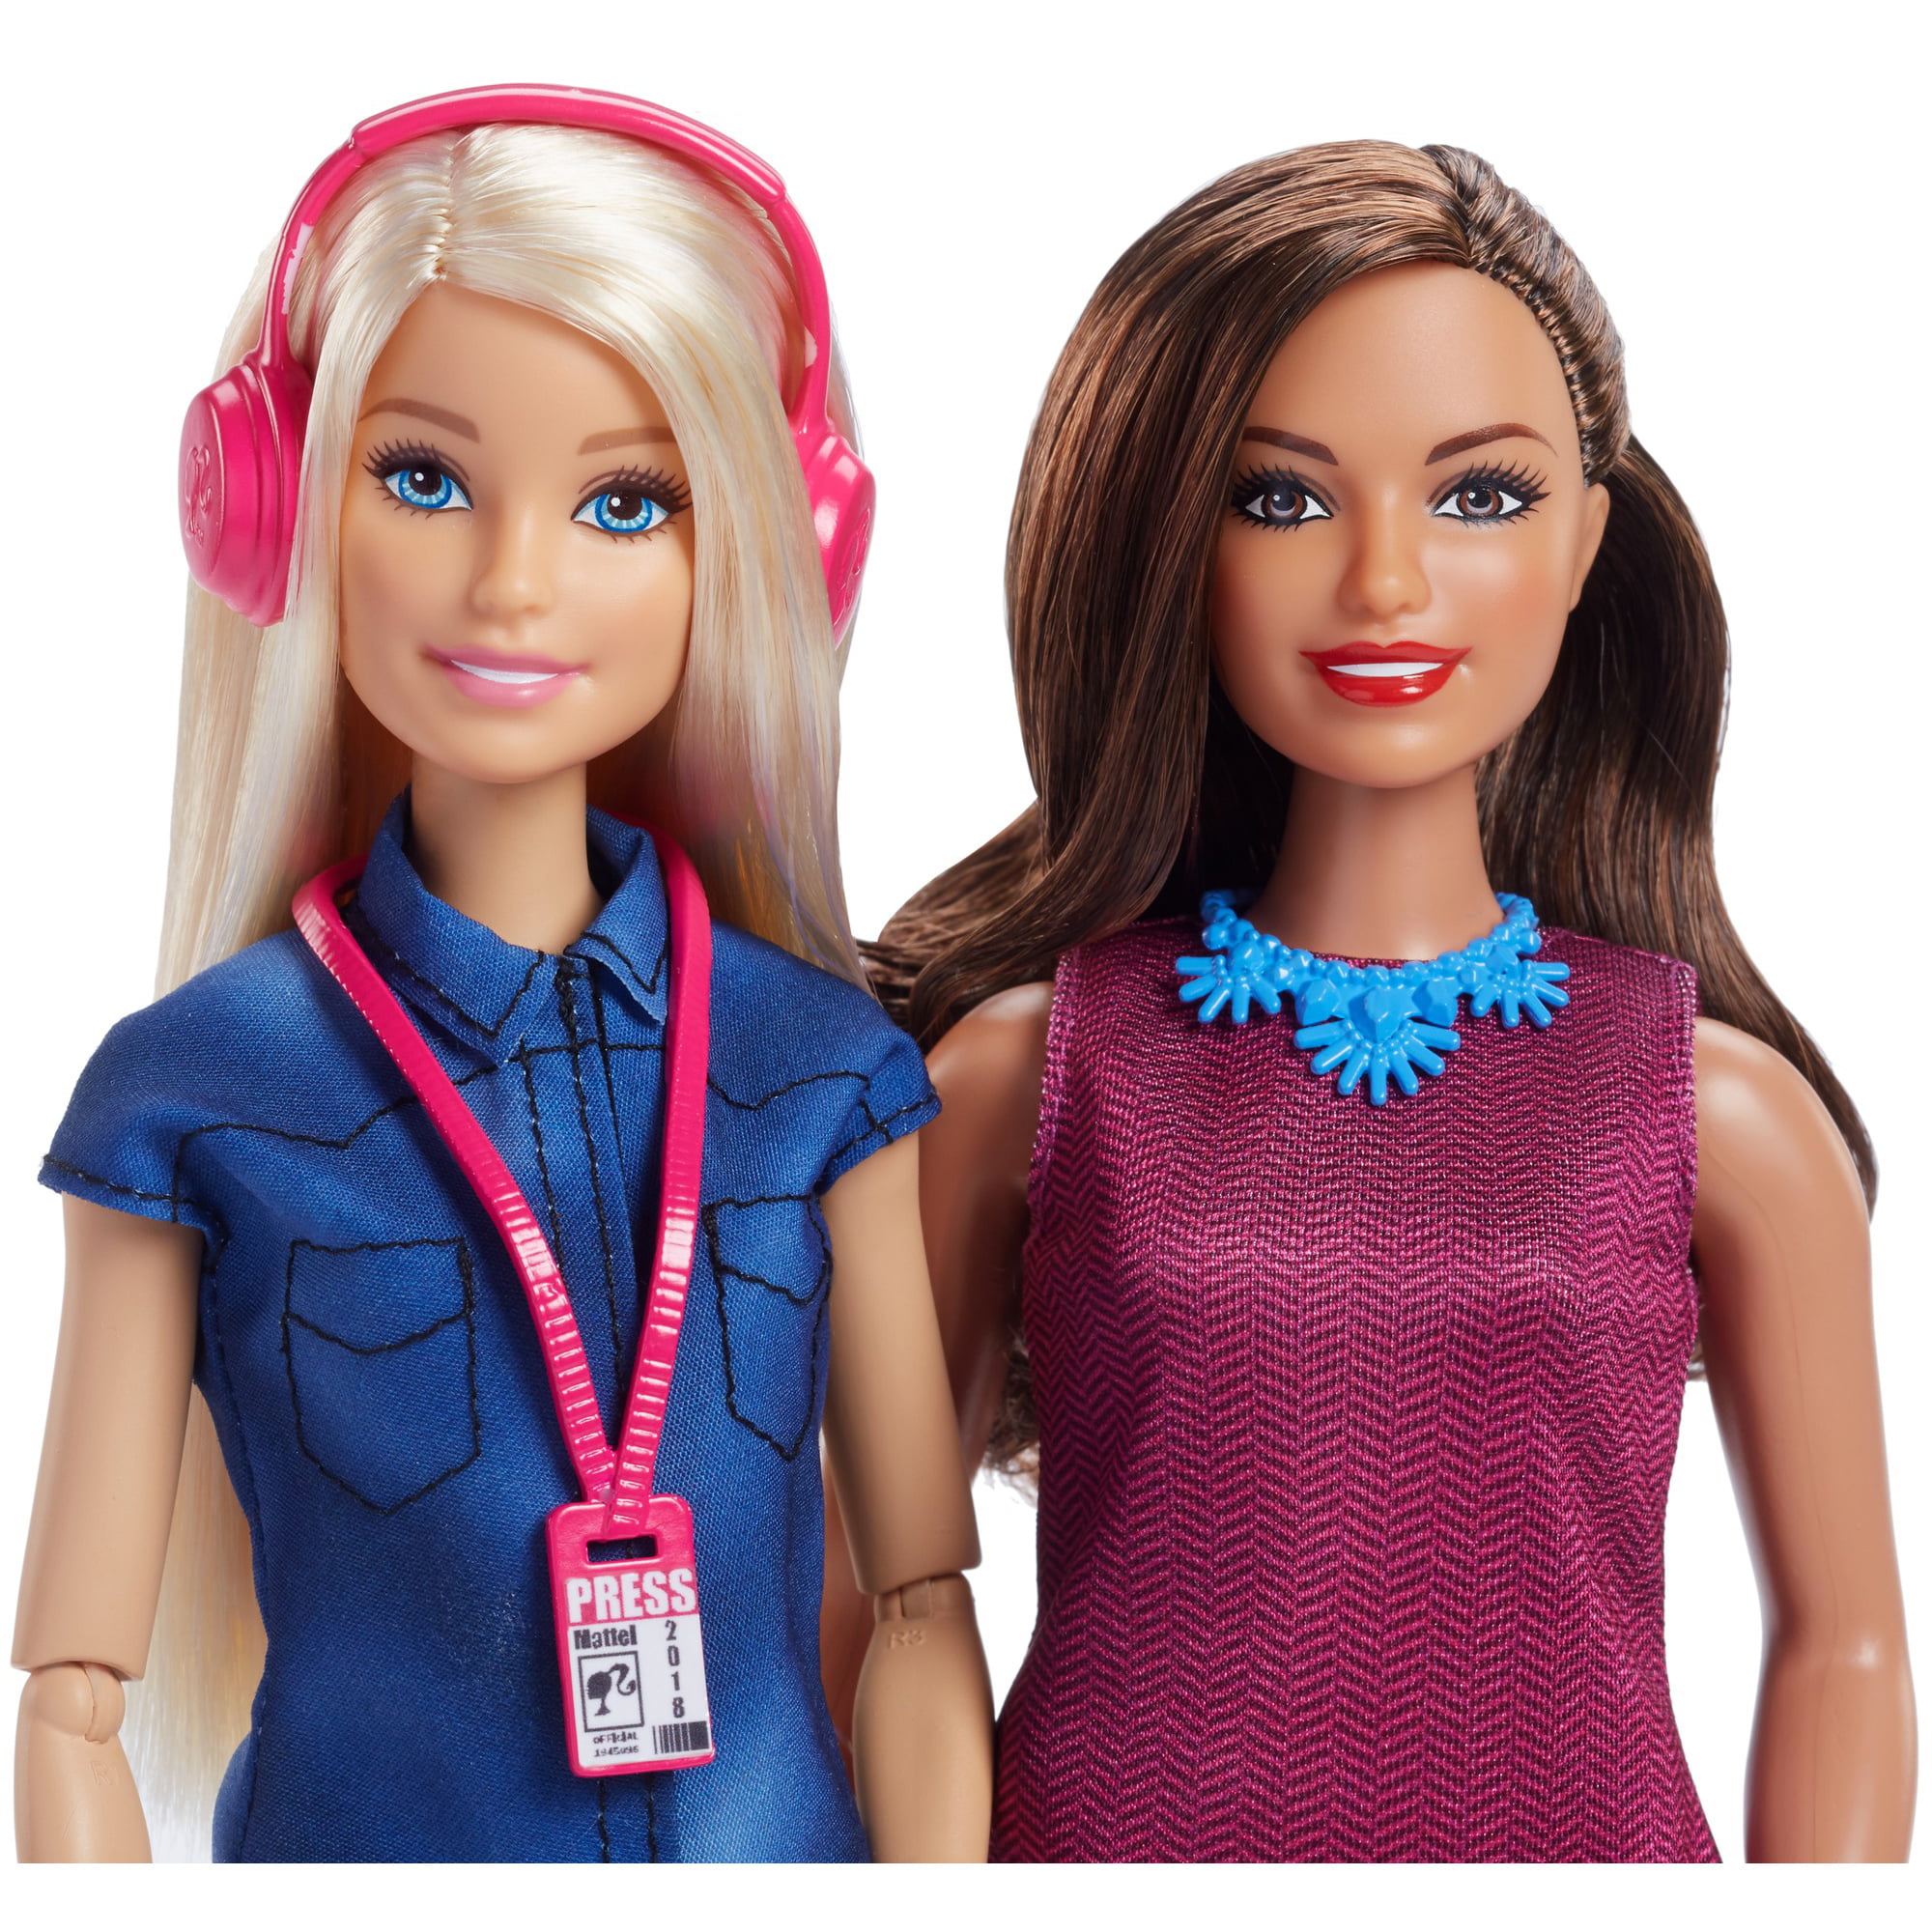 Кукла барби 2. Набор кукол Barbie команда теленовостей, fjb22. Валберис кукла Барби. Barbie кукла, fjb11. Кукла Барби Маттел.